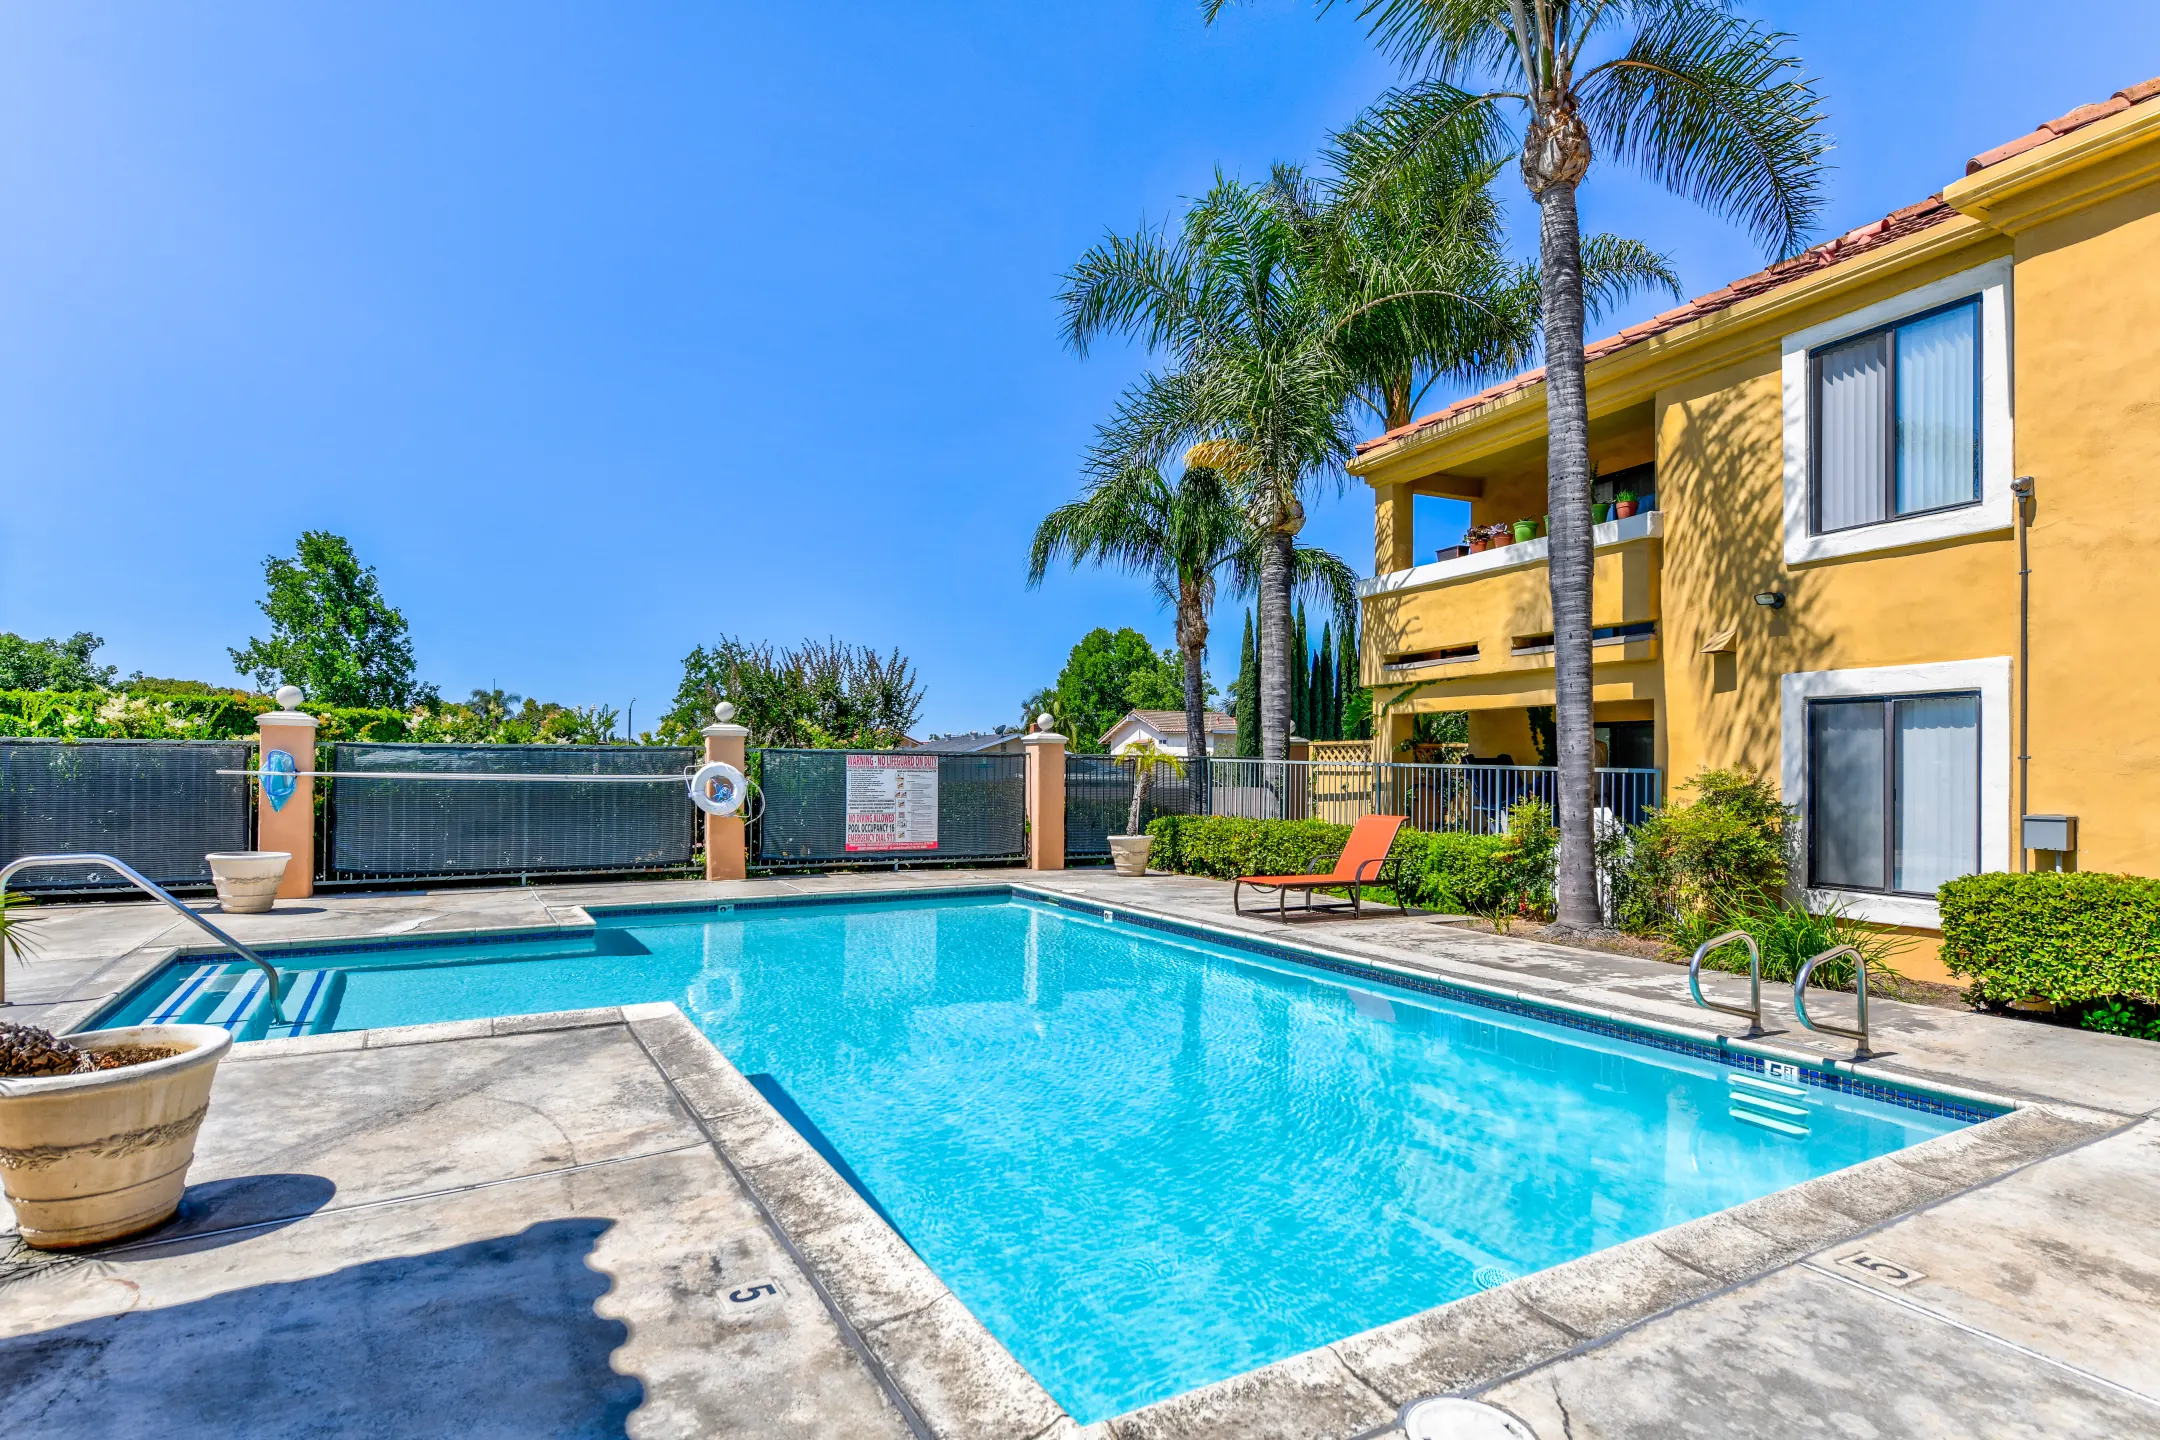 Pool - Portofino Apartments - Santa Ana, CA